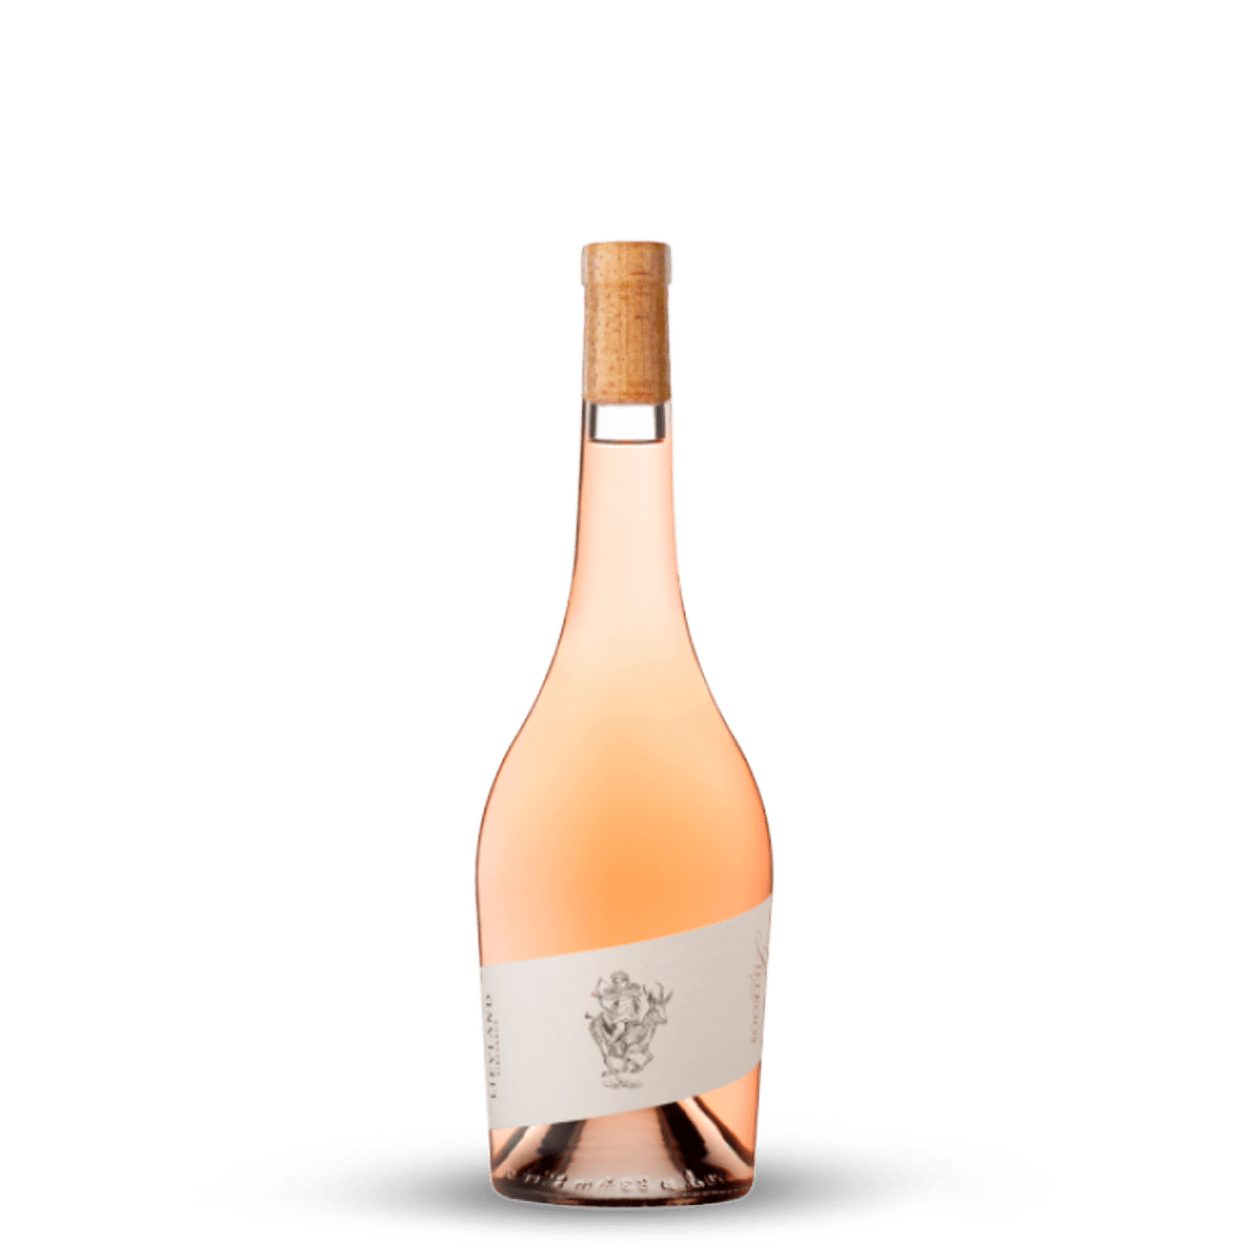 Lievland Vineyards Liefkoos Rosé